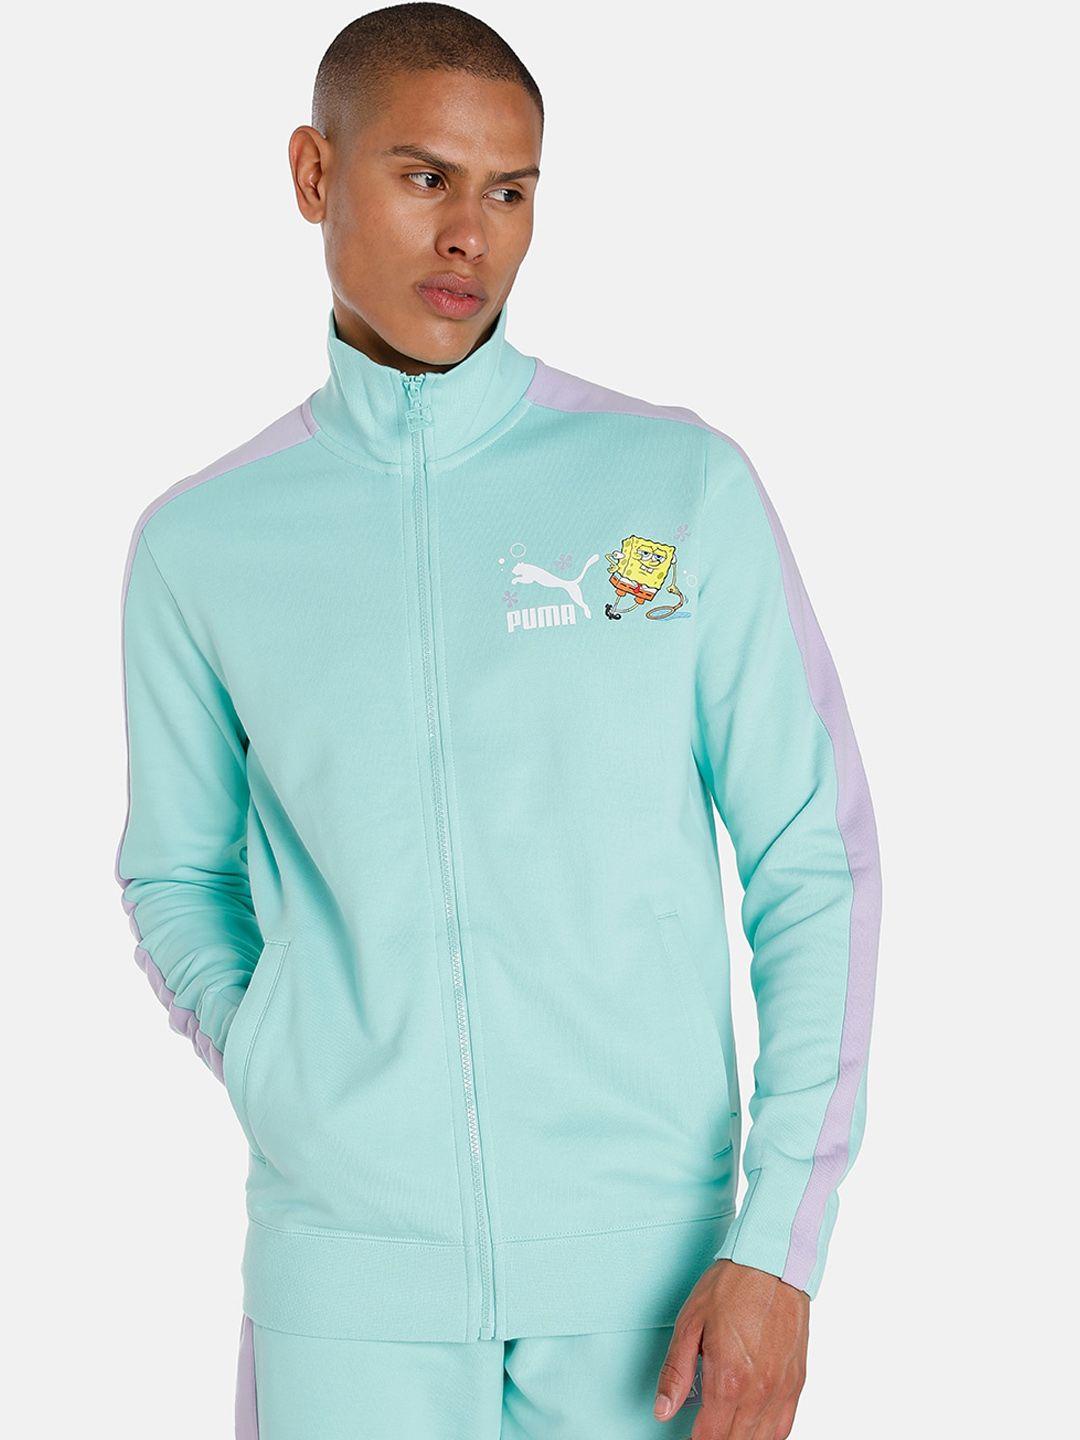 puma x spongebob t7 logo printed cotton sporty jacket